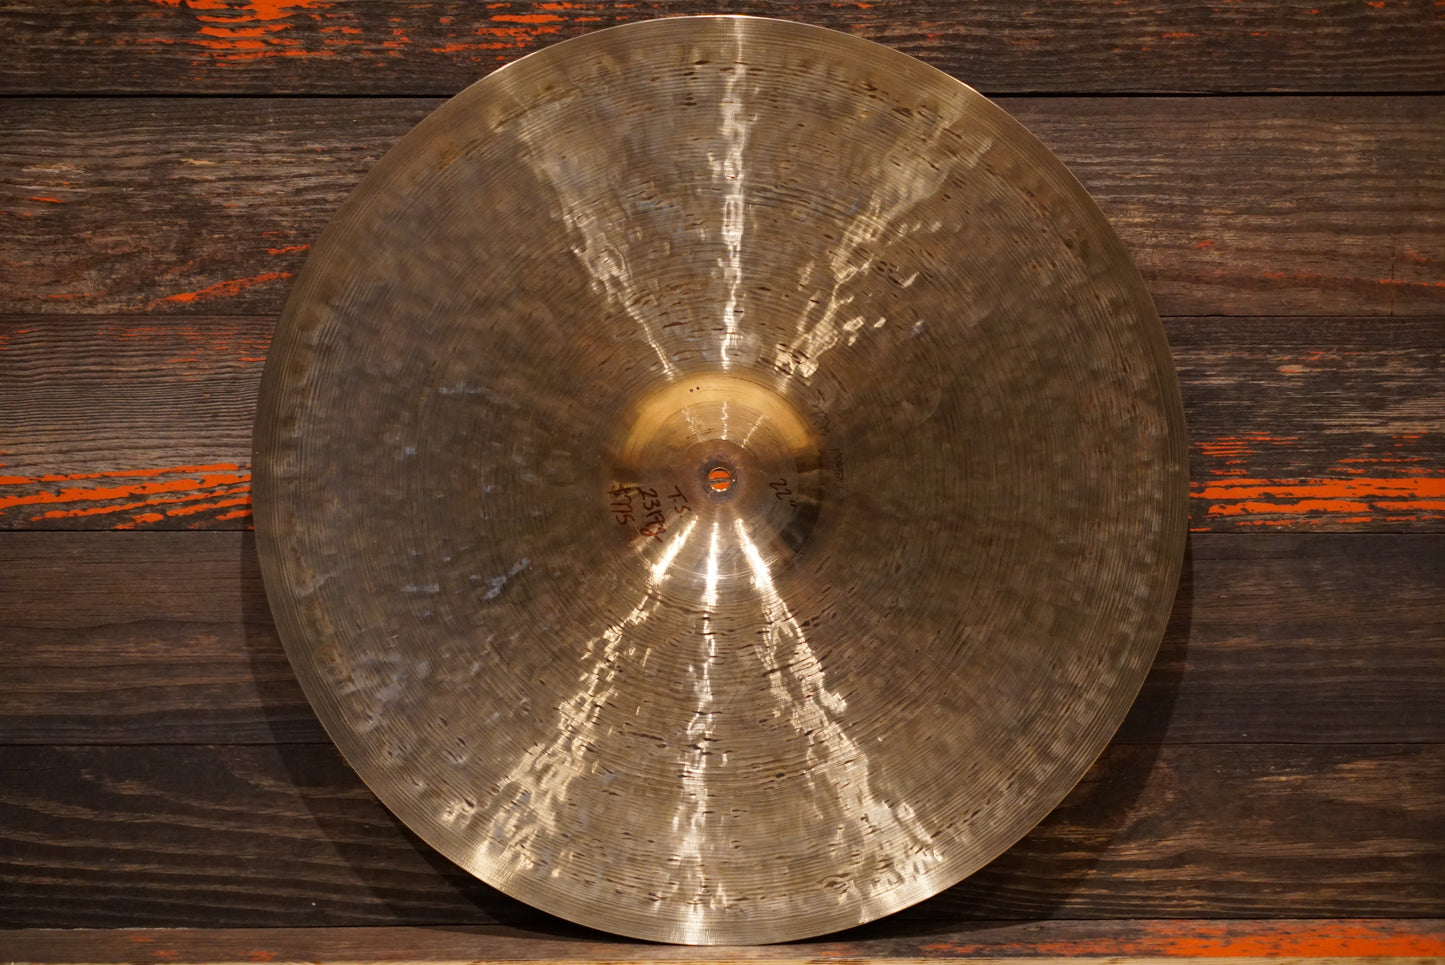 Funch 22" Oriental Ride Cymbal - 2317g